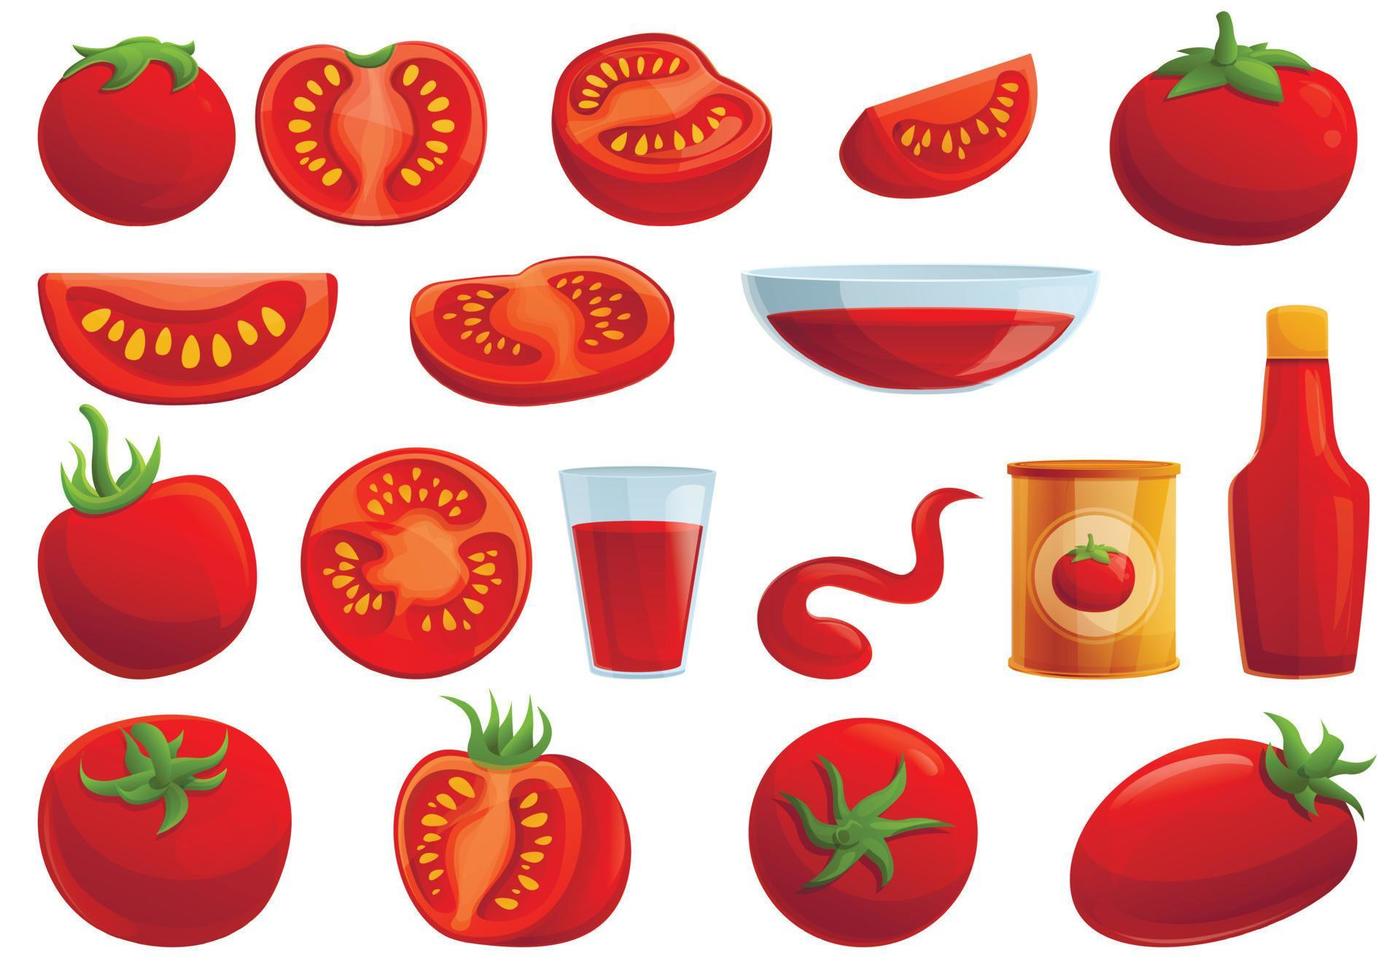 Tomato icons set, cartoon style vector